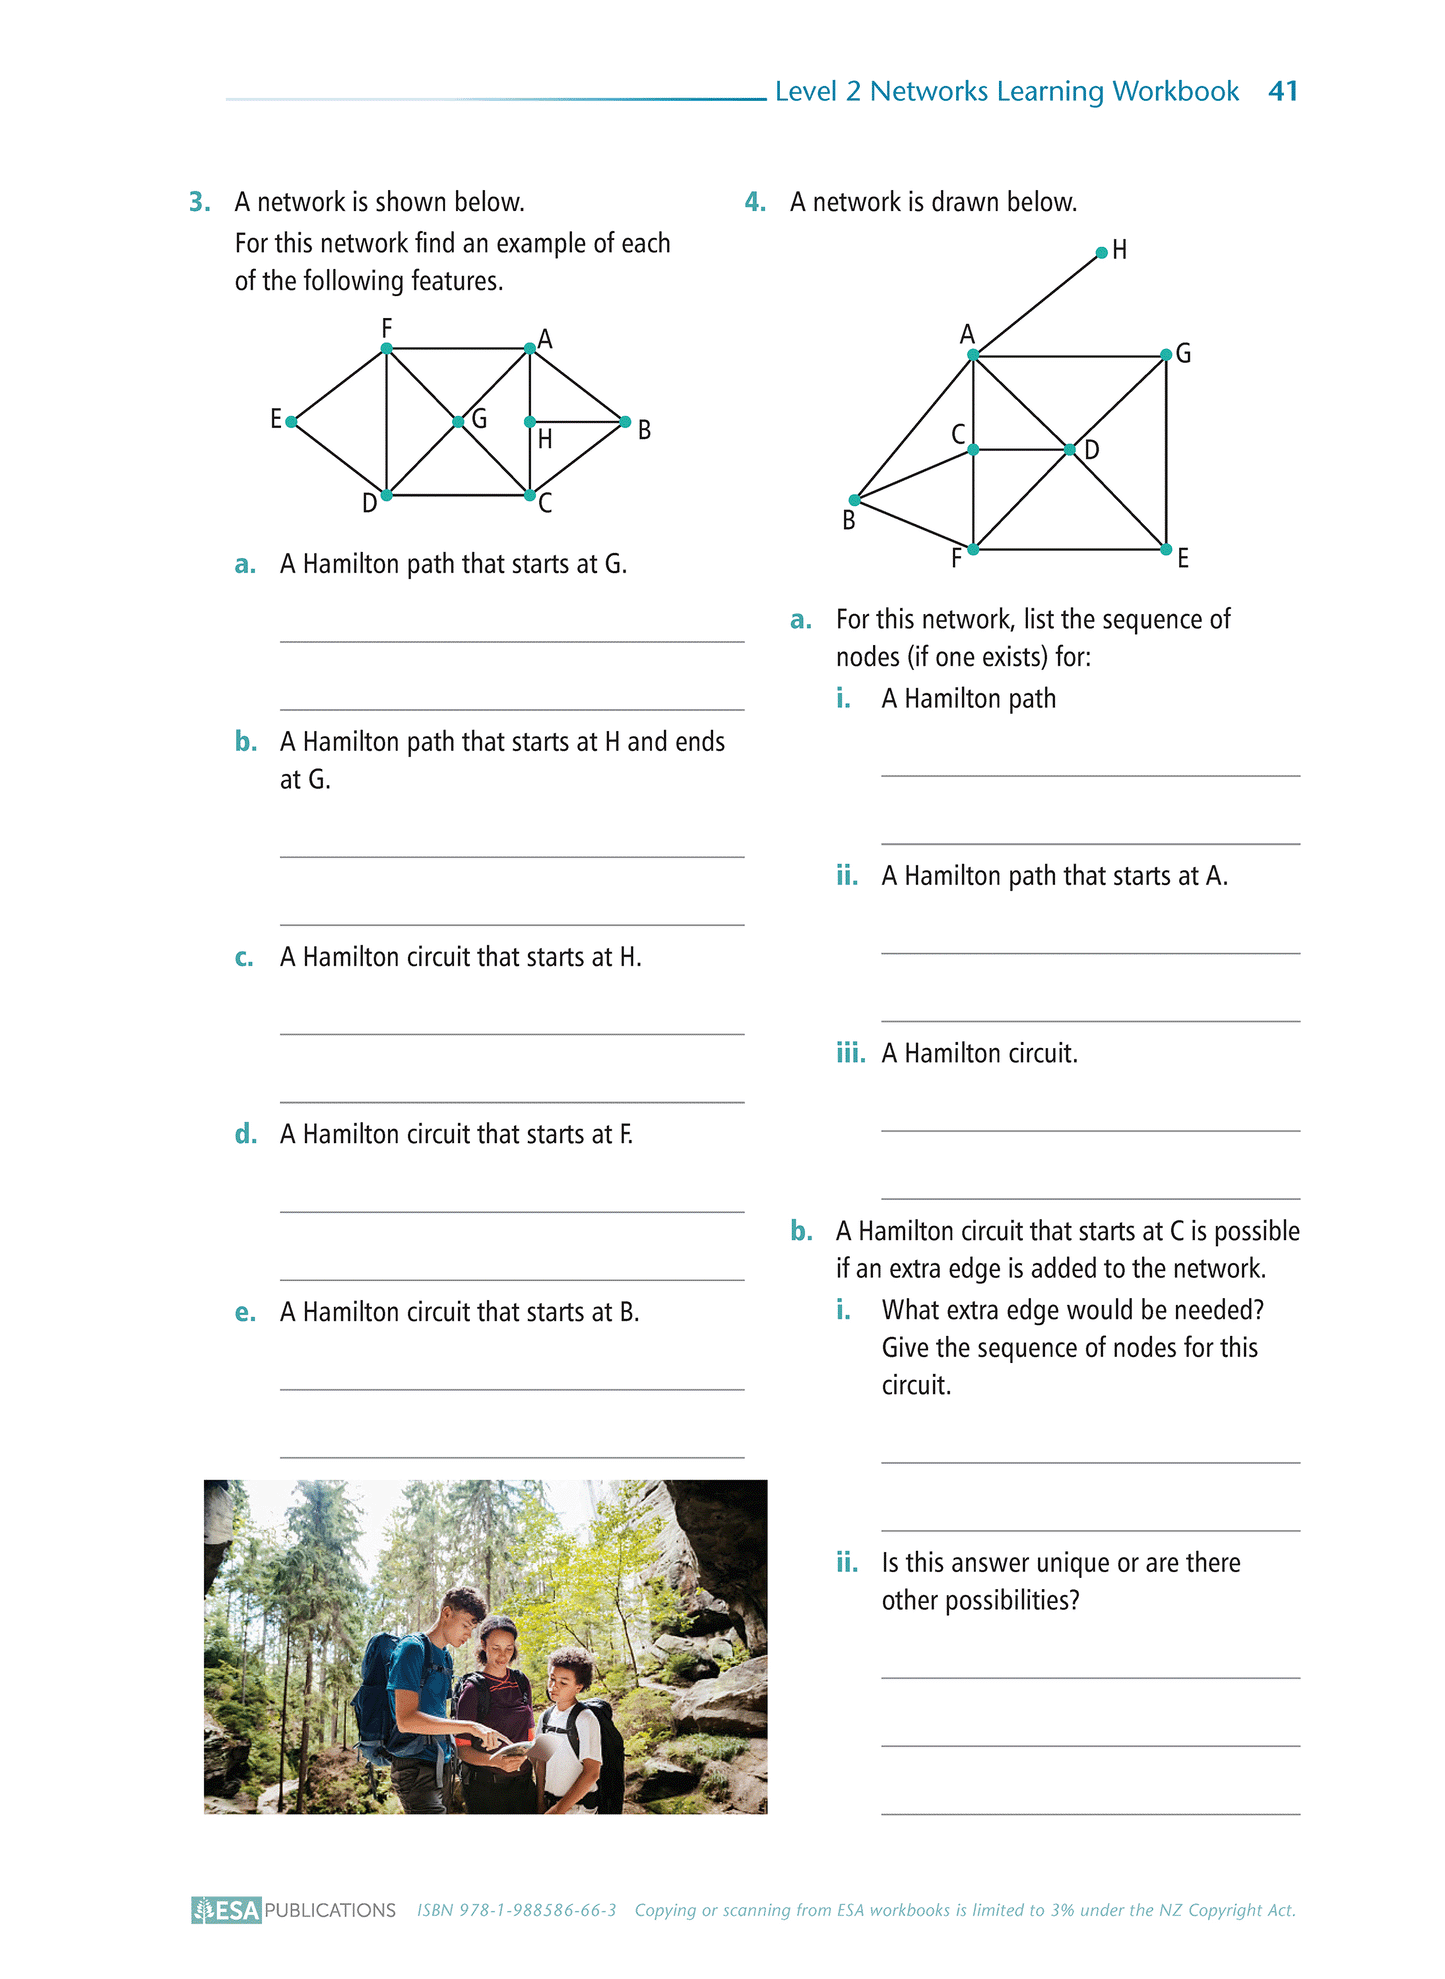 Level 2 Networks 2.5 Learning Workbook